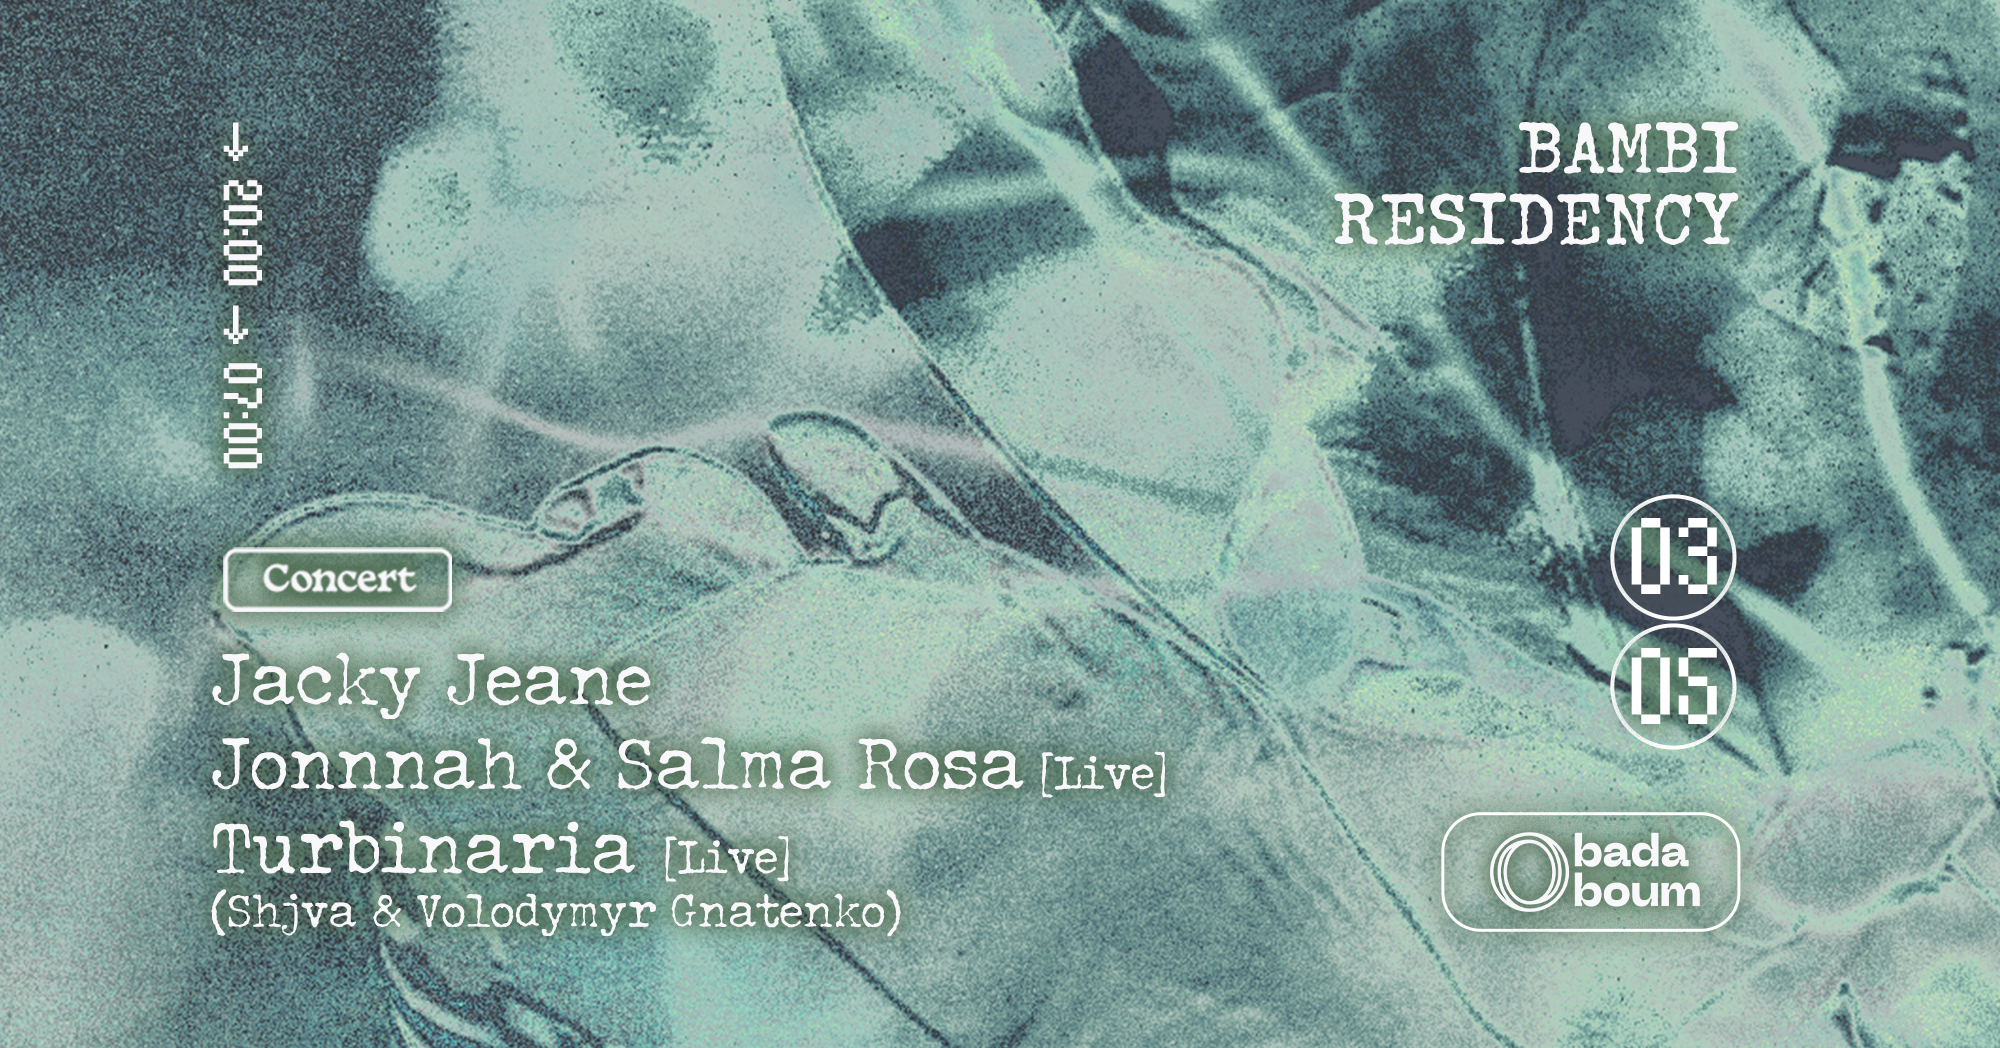 Concert — Bambi residency w/ Turbinaria live (+) Salma Rosa & Jonnnah live (+) Jacky Jeane - Página frontal